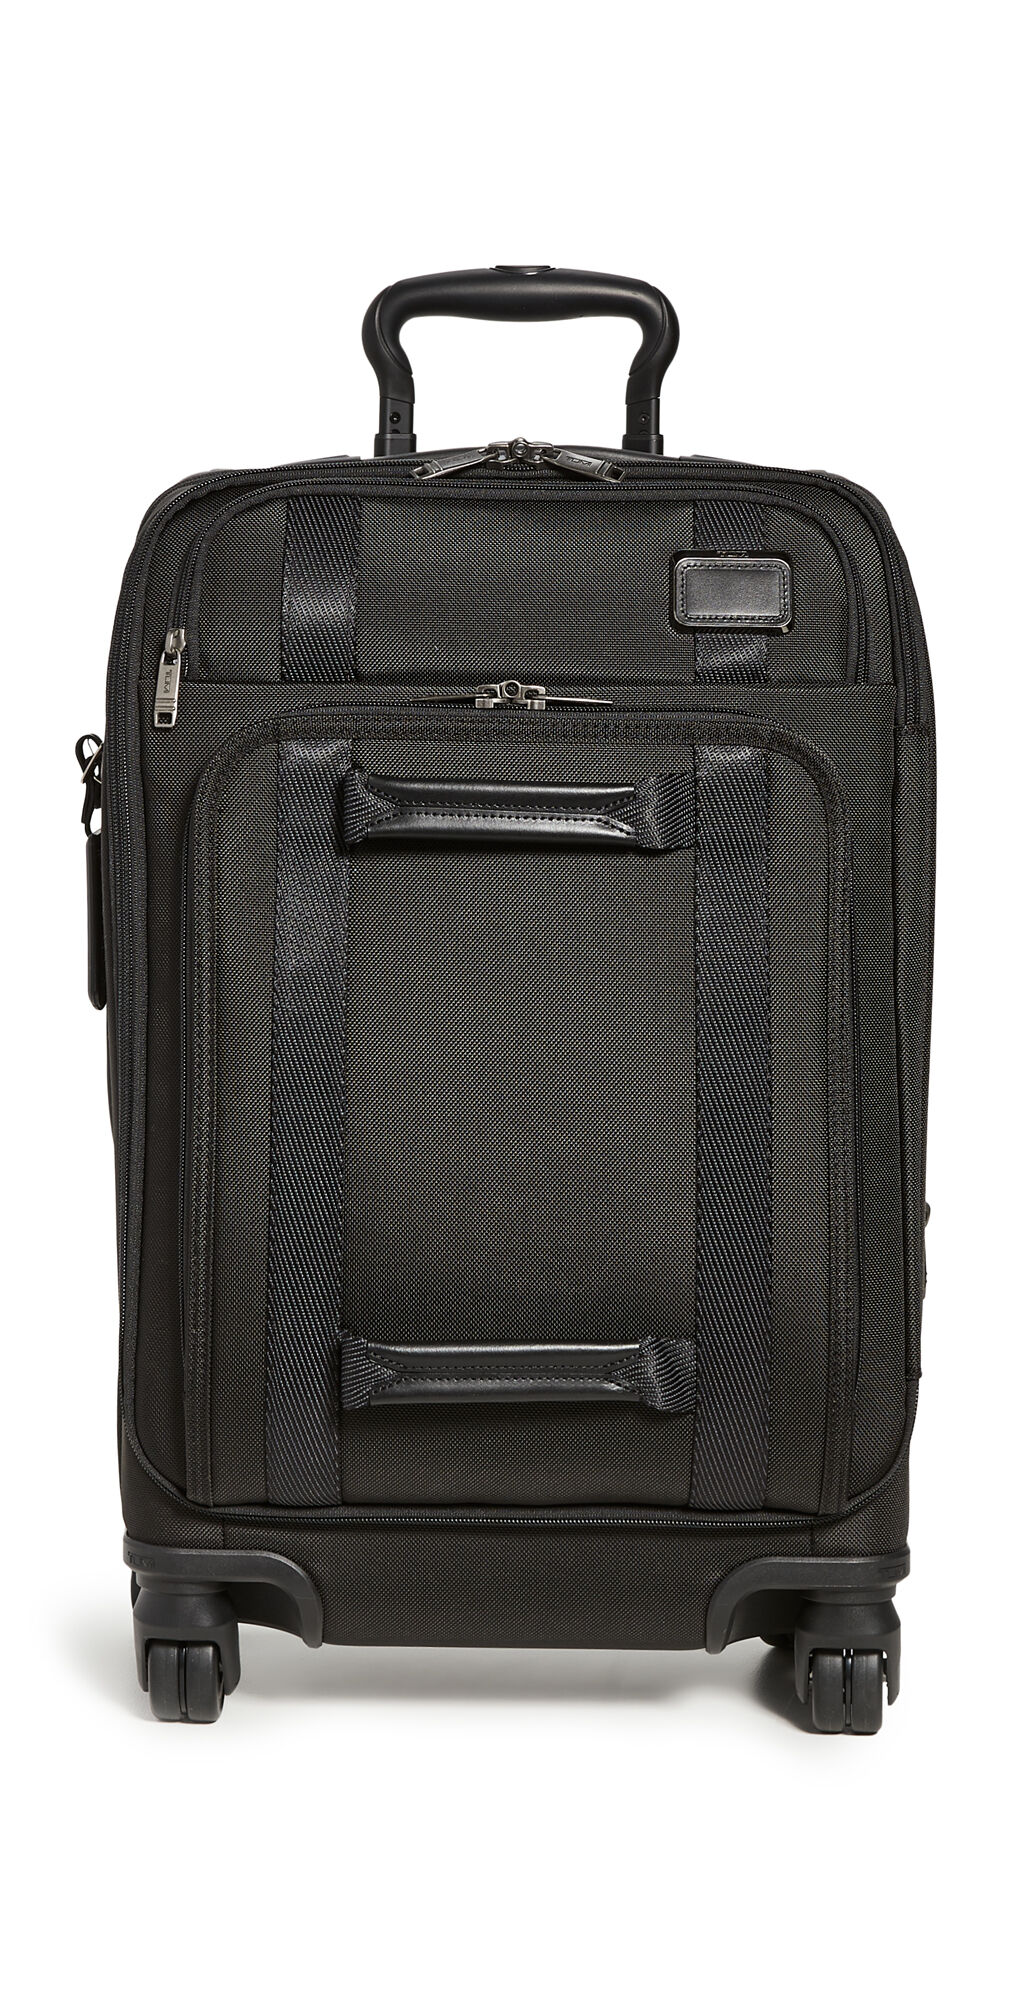 Tumi International Front Lid 4 Wheel Carry On Suitcase Black One Size  Black  size:One Size